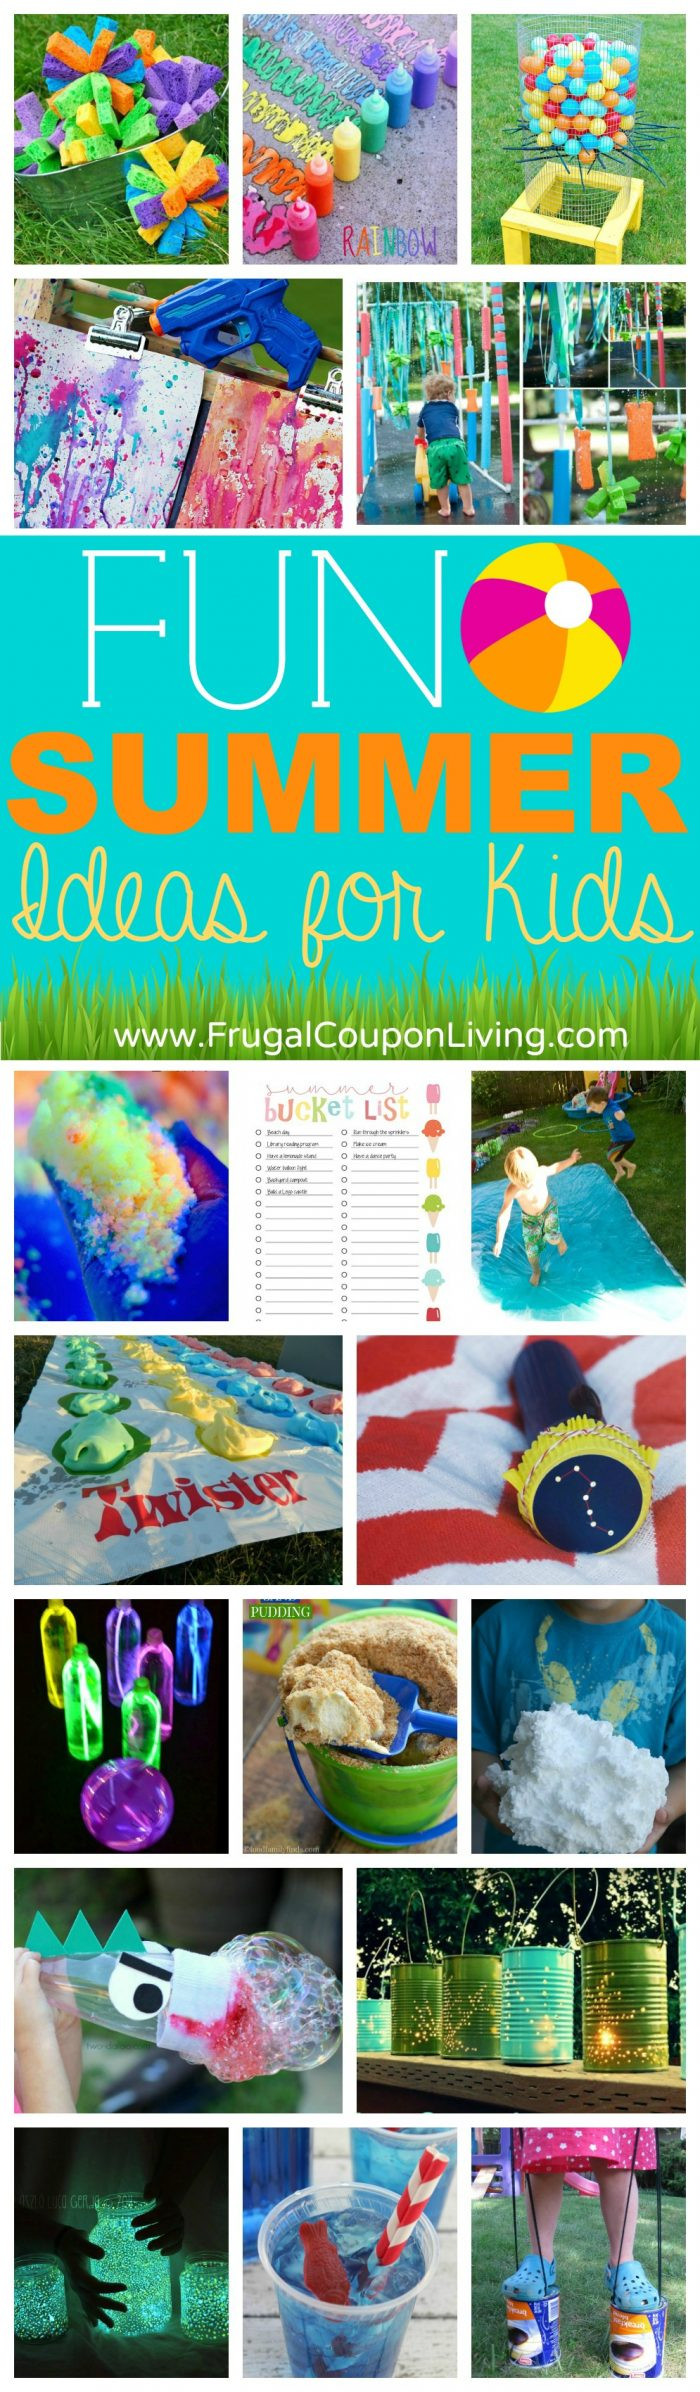 DIY Ideas For Kids
 DIY Summer Fun Ideas for Kids